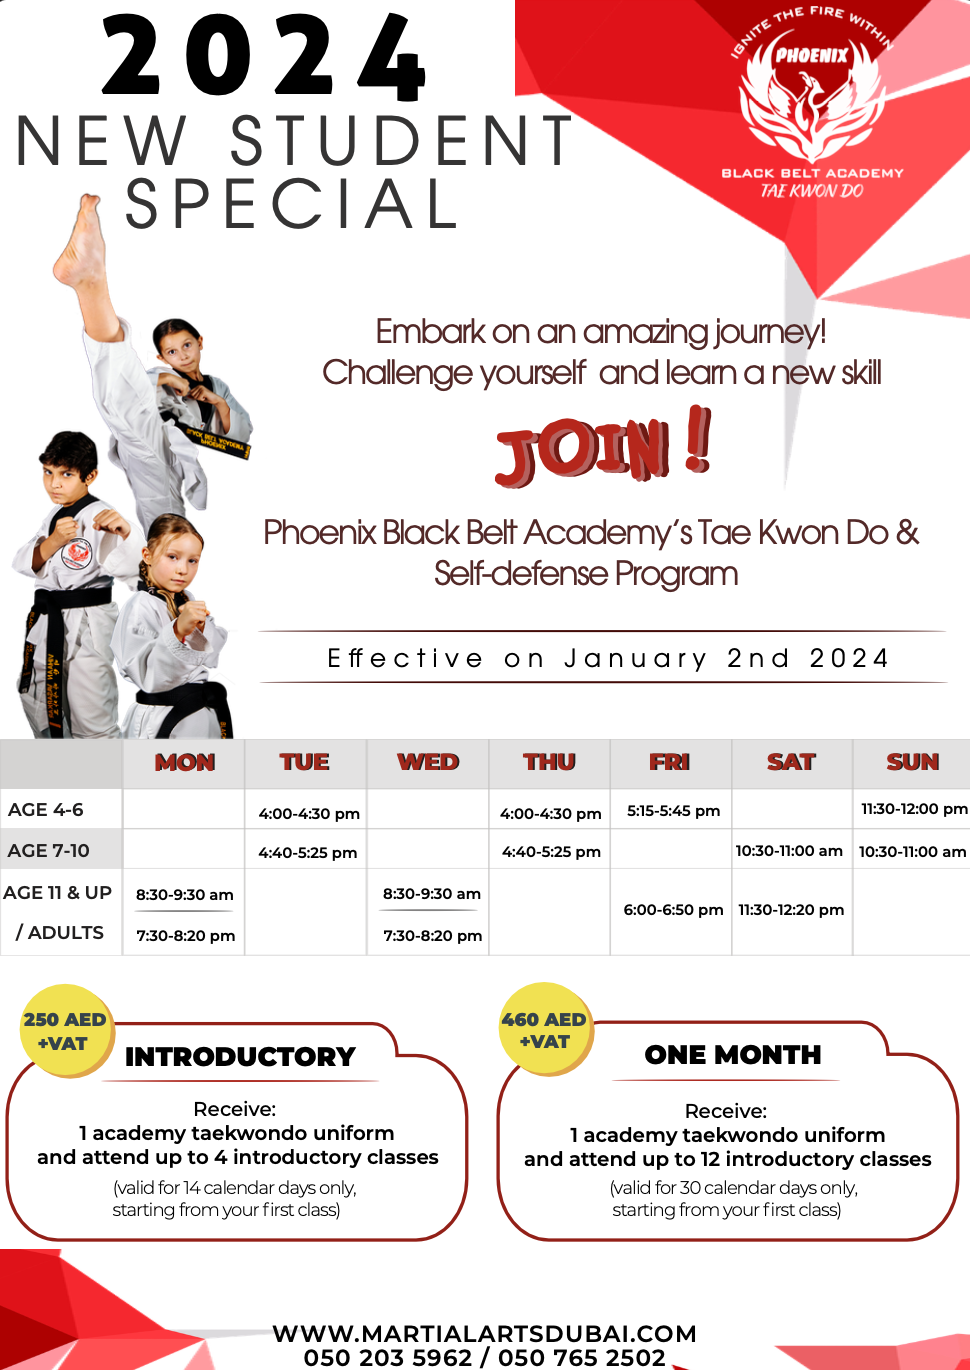 Special Offer for Taekwondo classes